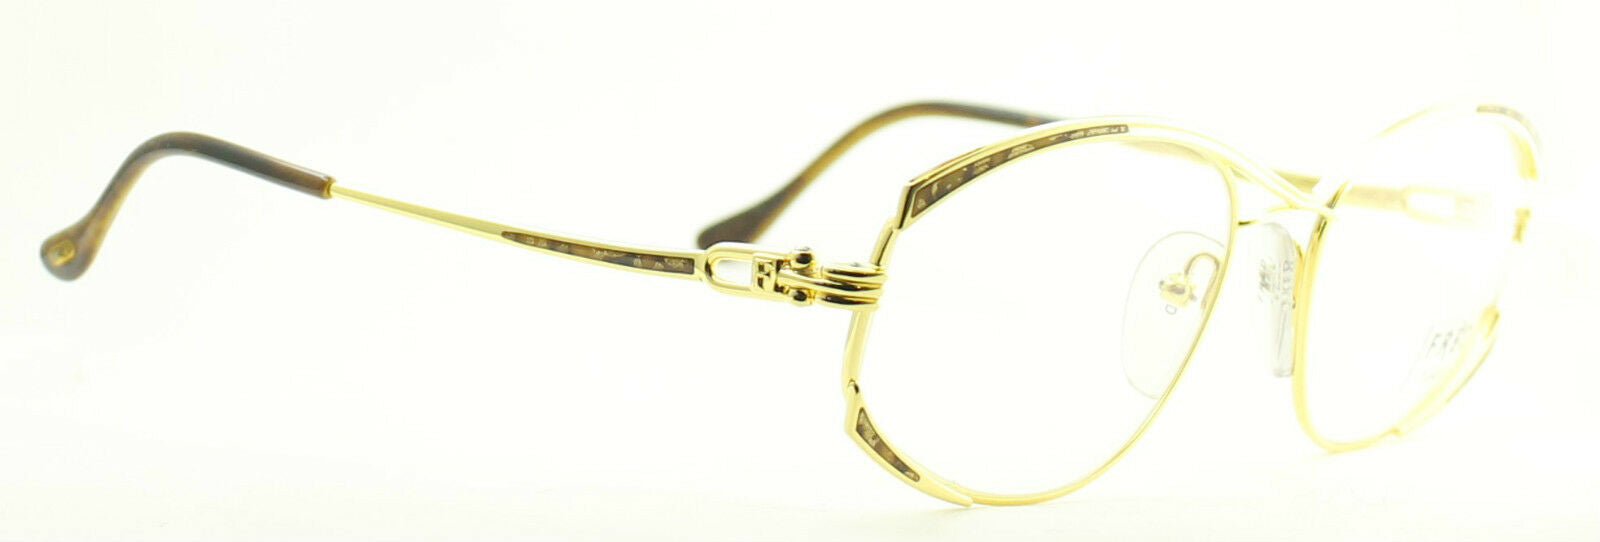 FRED Lunettes JOYAU 006 Eyewear FRAMES RX Optical Eyeglasses Glasses - France